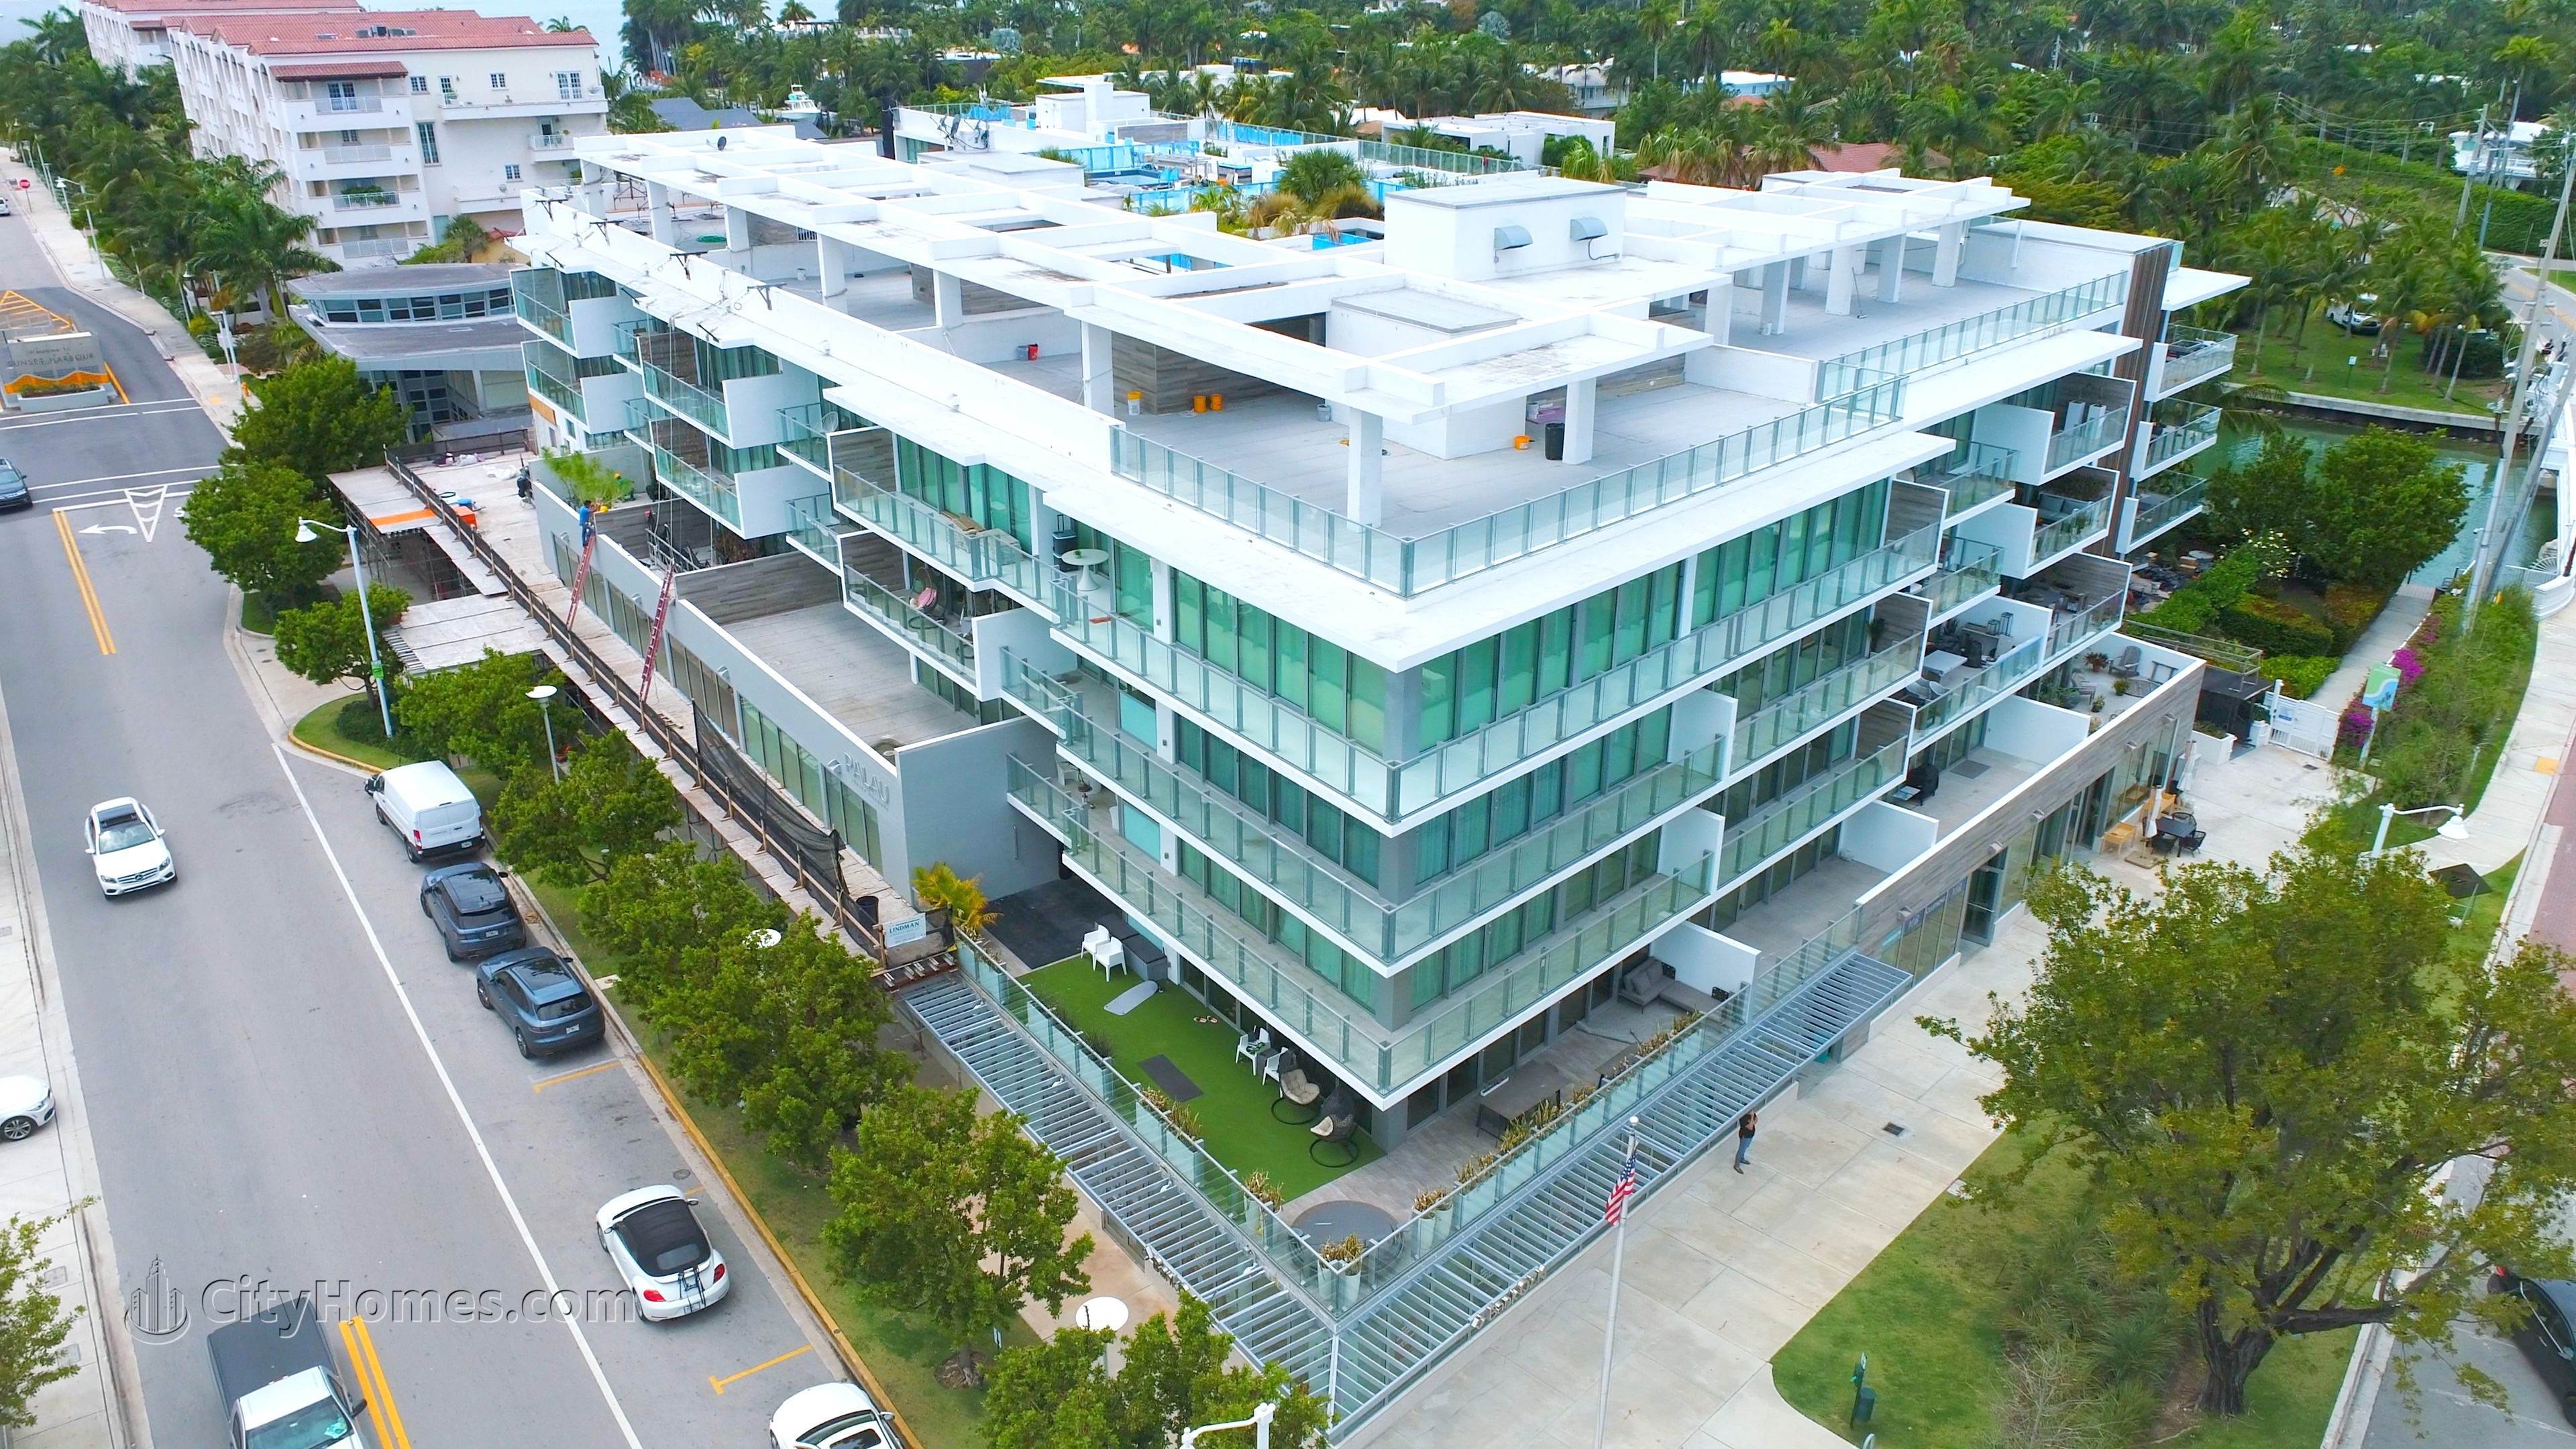 6. PALAU SUNSET HARBOUR building at 1201 20th Street, Mid Beach, Miami Beach, FL 33139